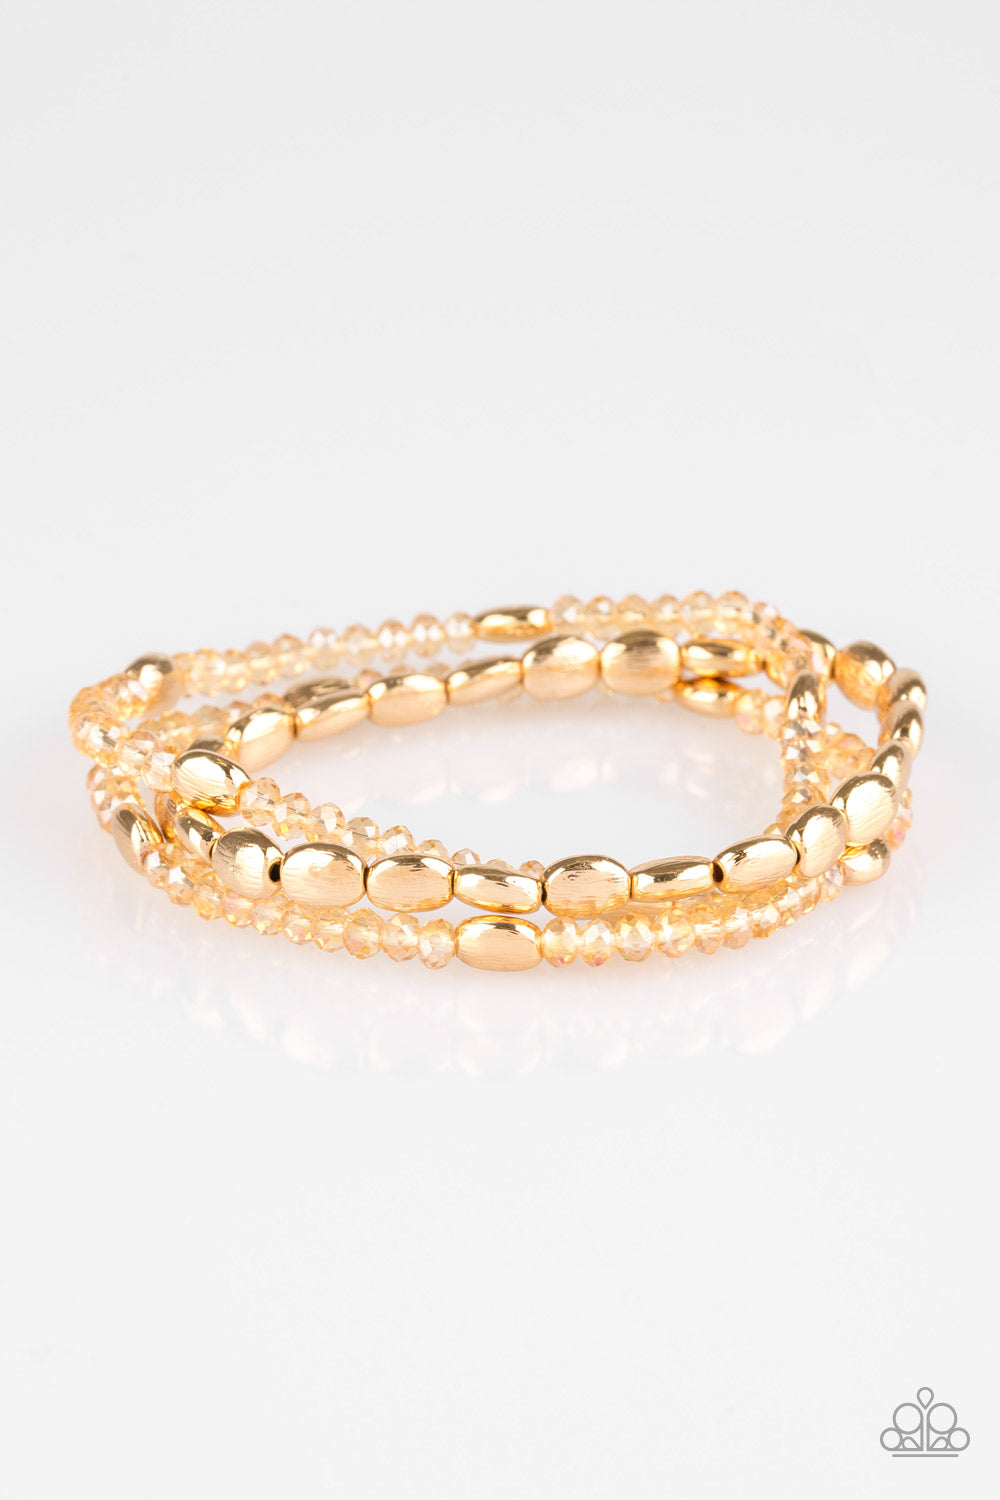 Hello Beautiful - Gold bracelet